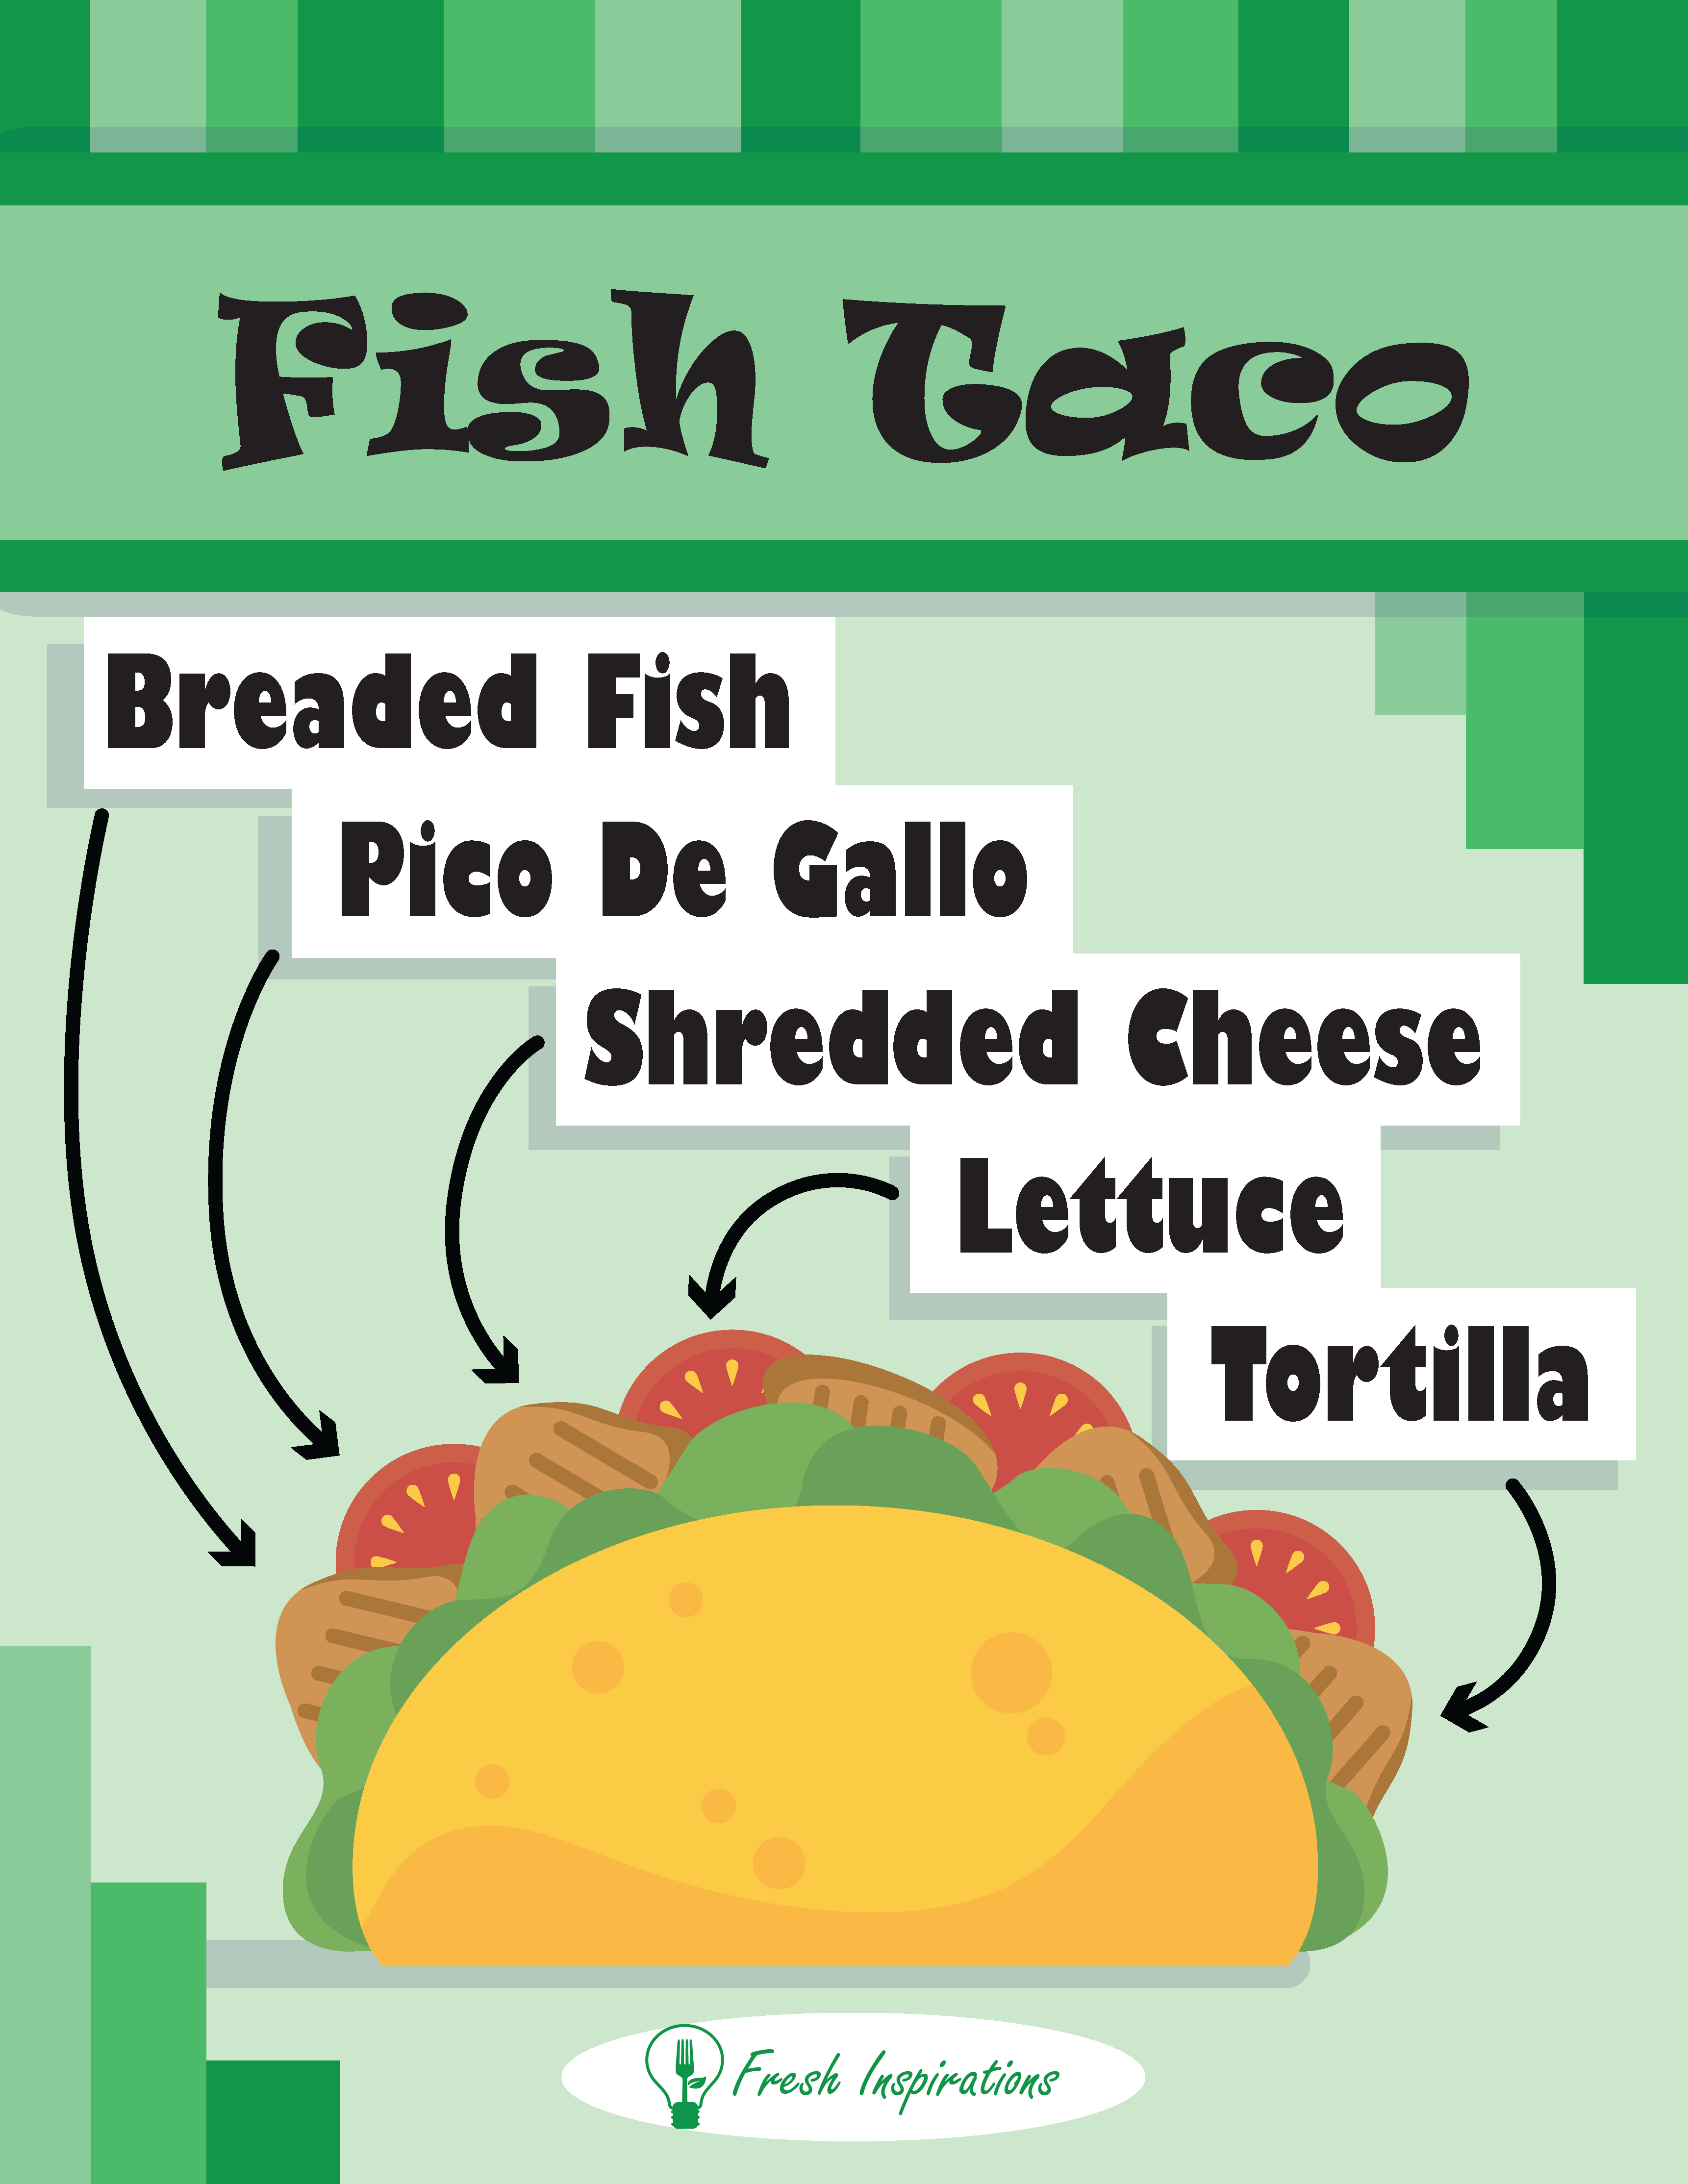 Fish Taco 